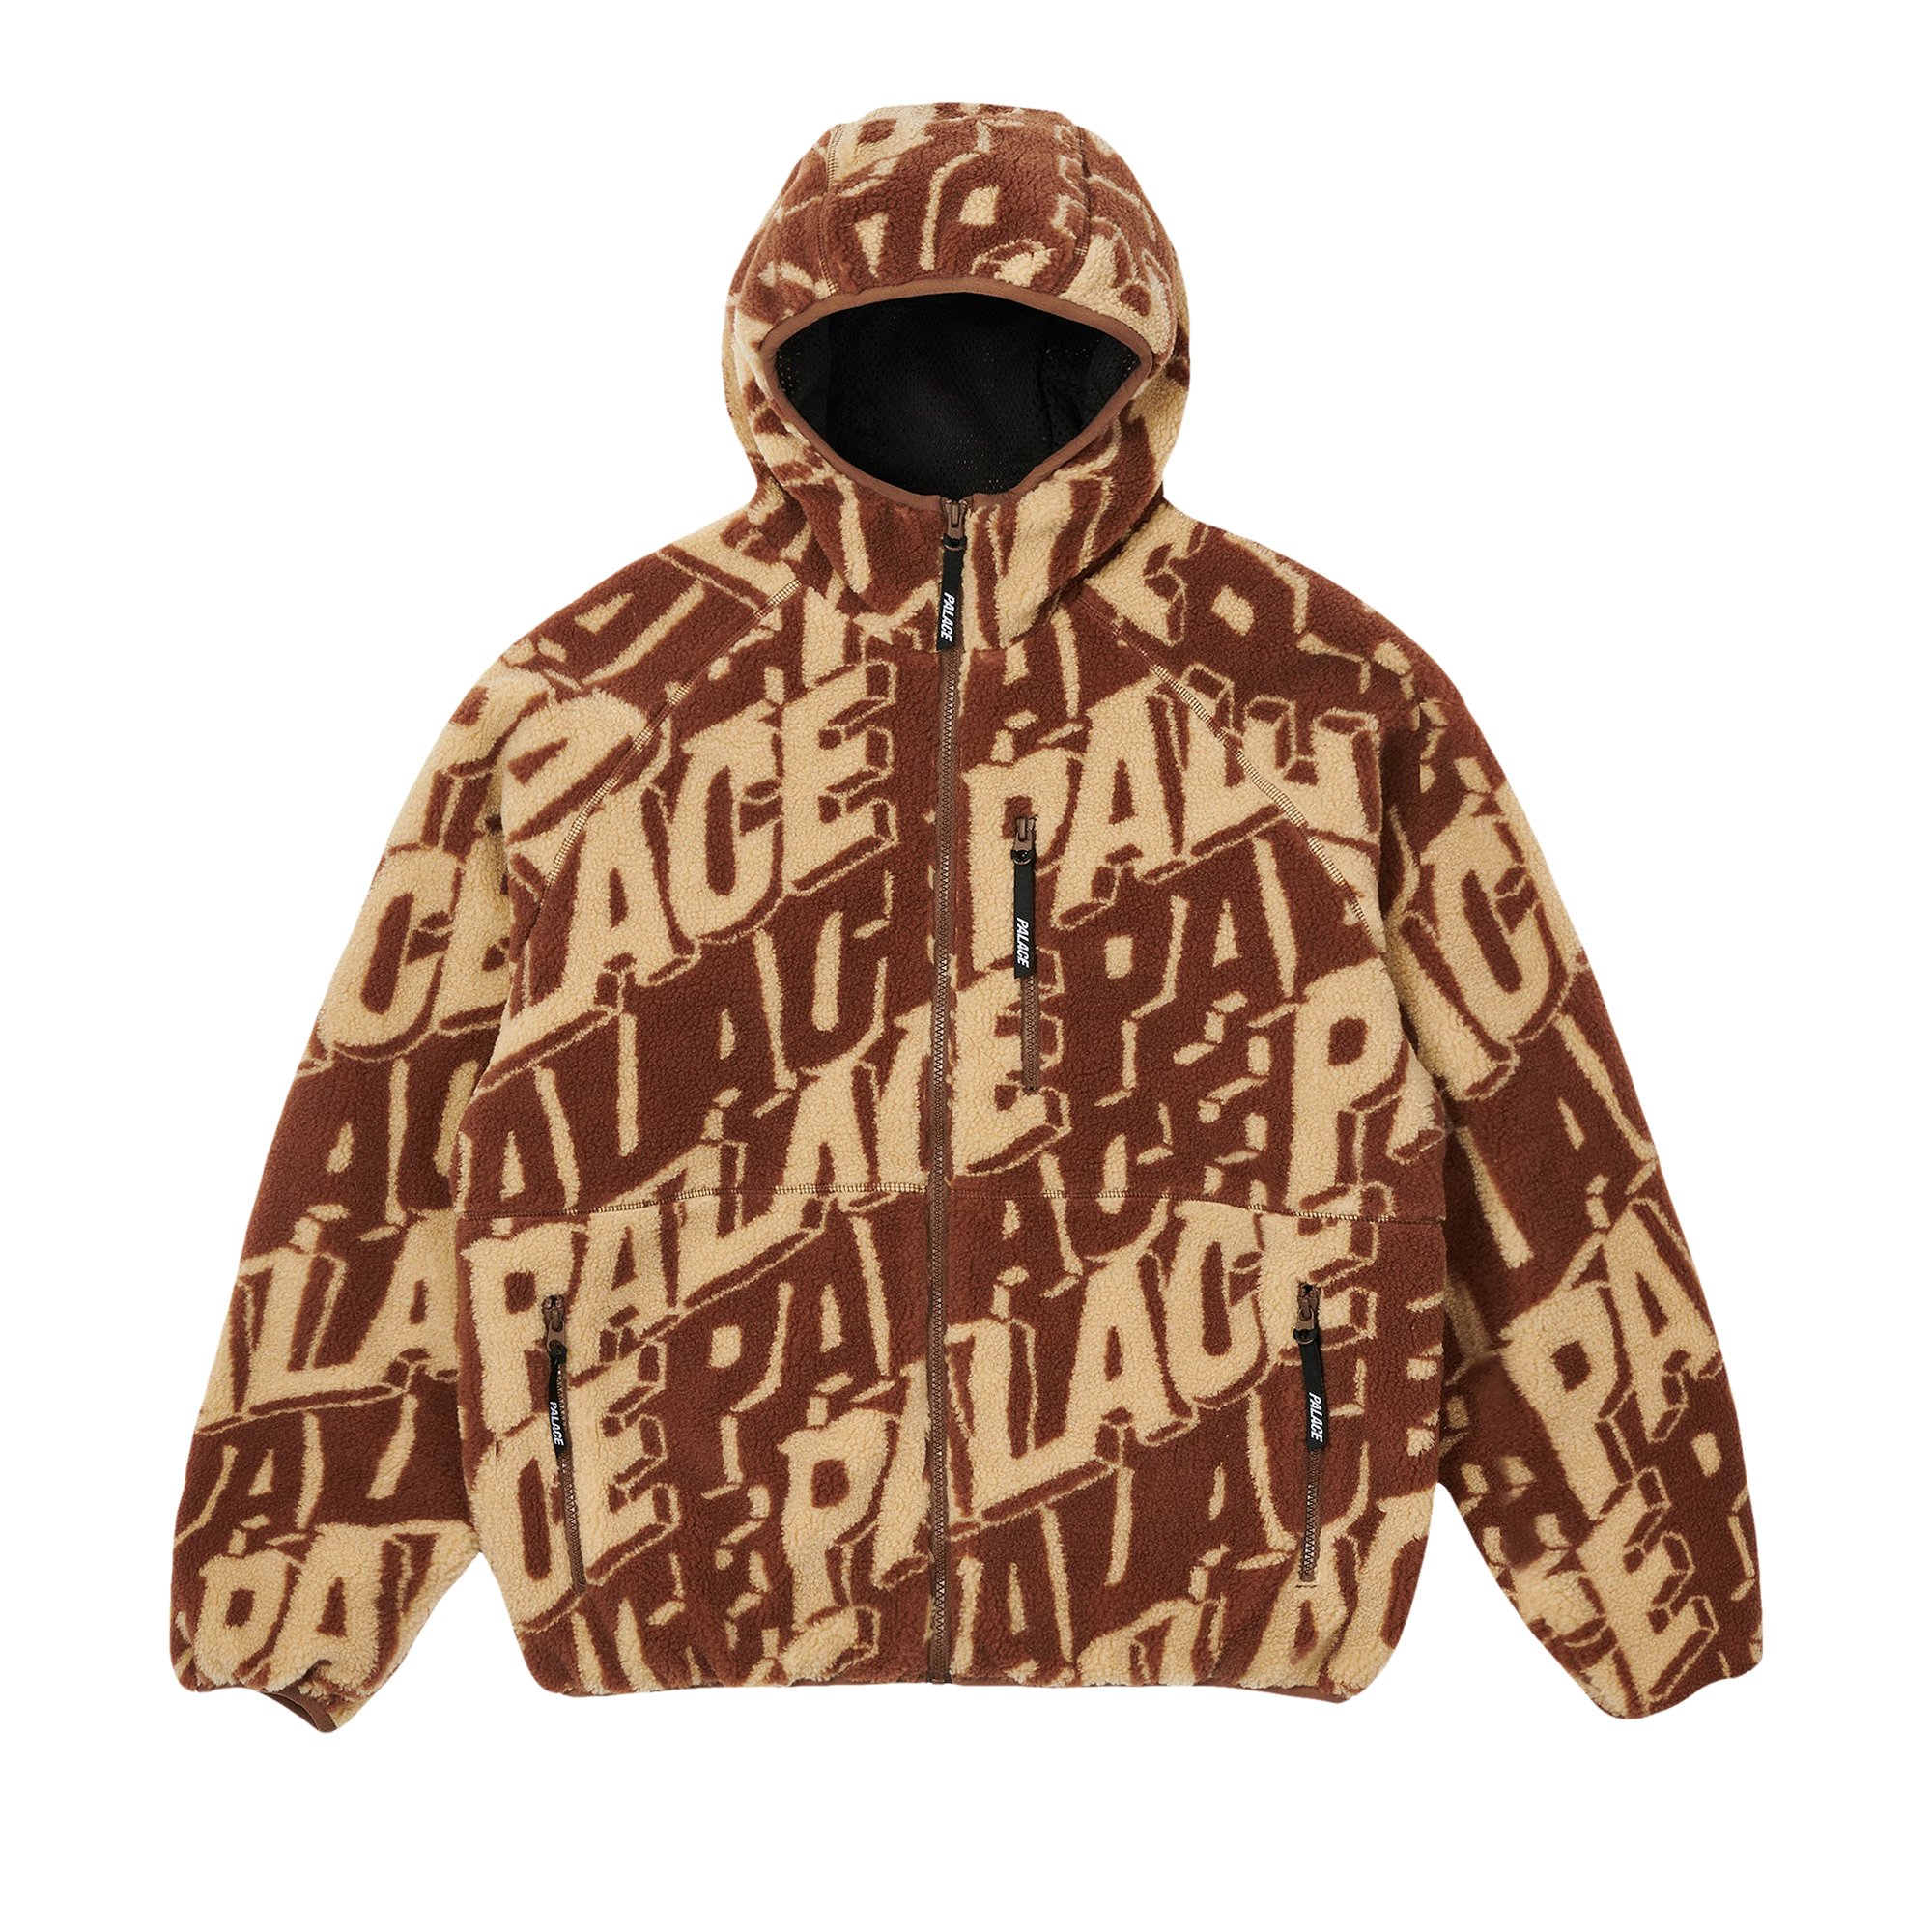 Palace Jacquard Fleece Hooded Jacket 'Tan/Brown'